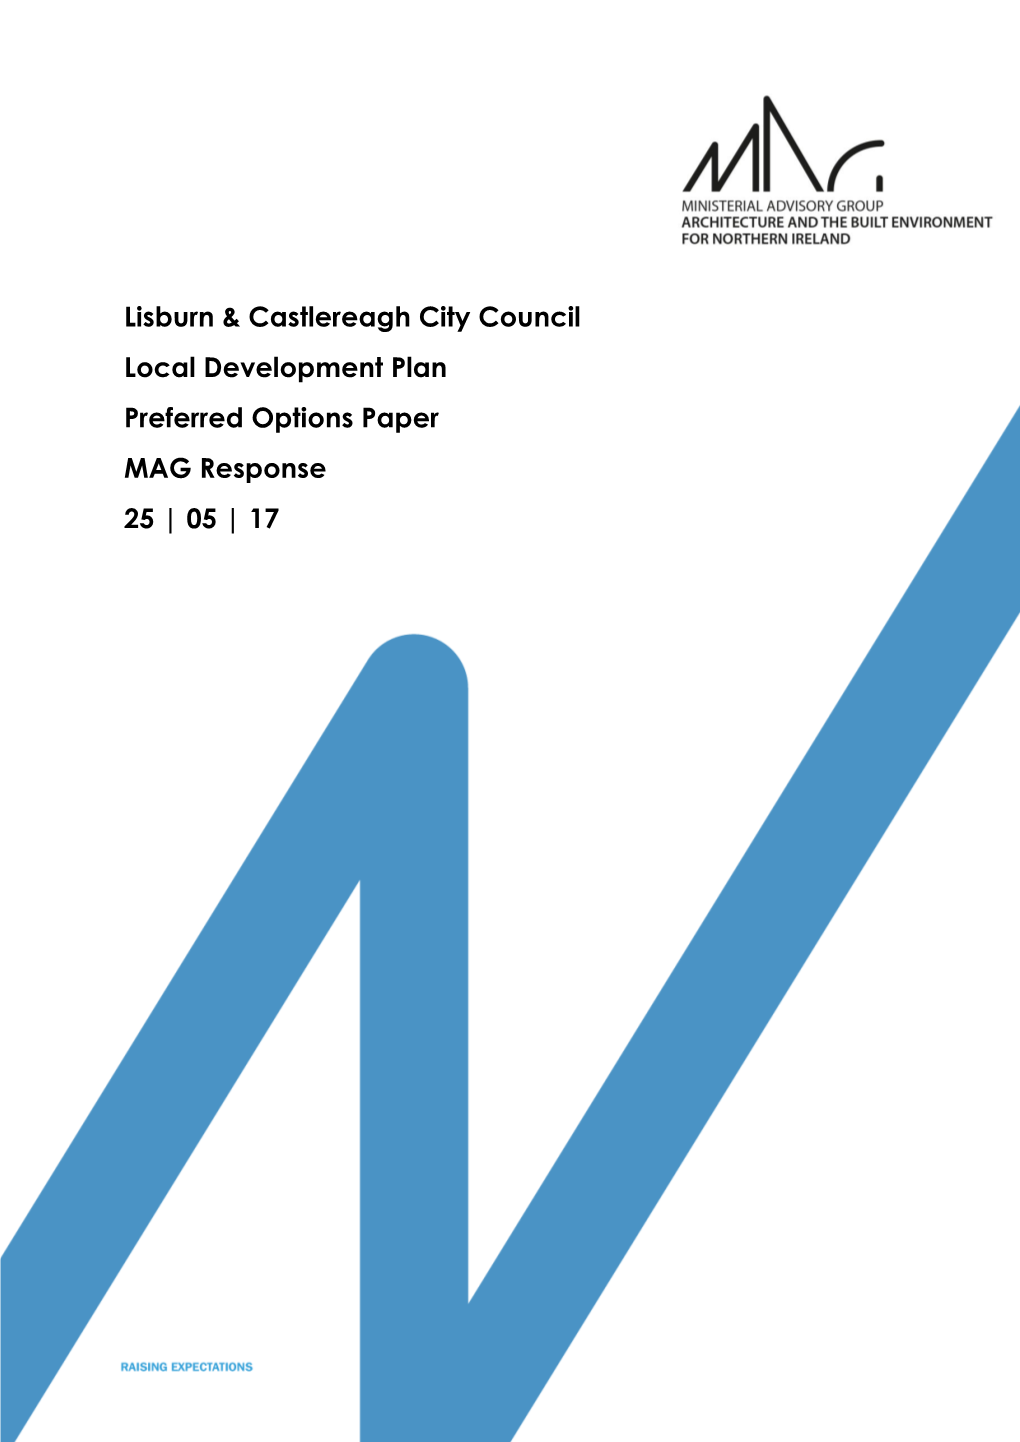 Lisburn & Castlereagh City Council Local Development Plan Preferred